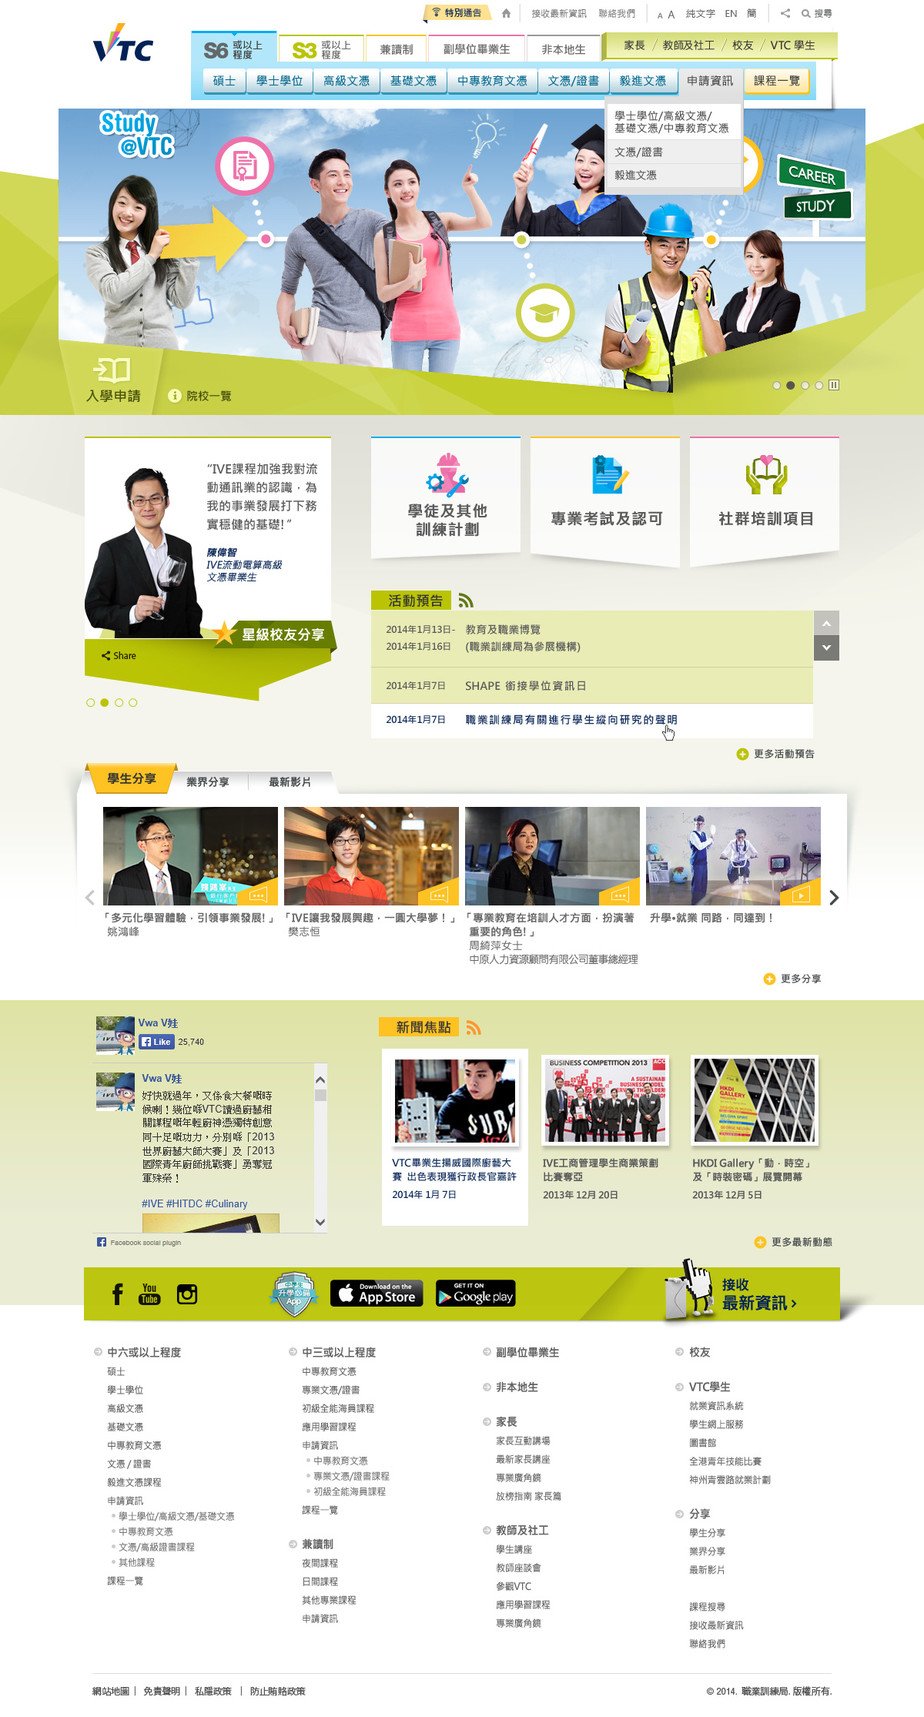 Vocational Training Council website screenshot for desktop version 1 of 8